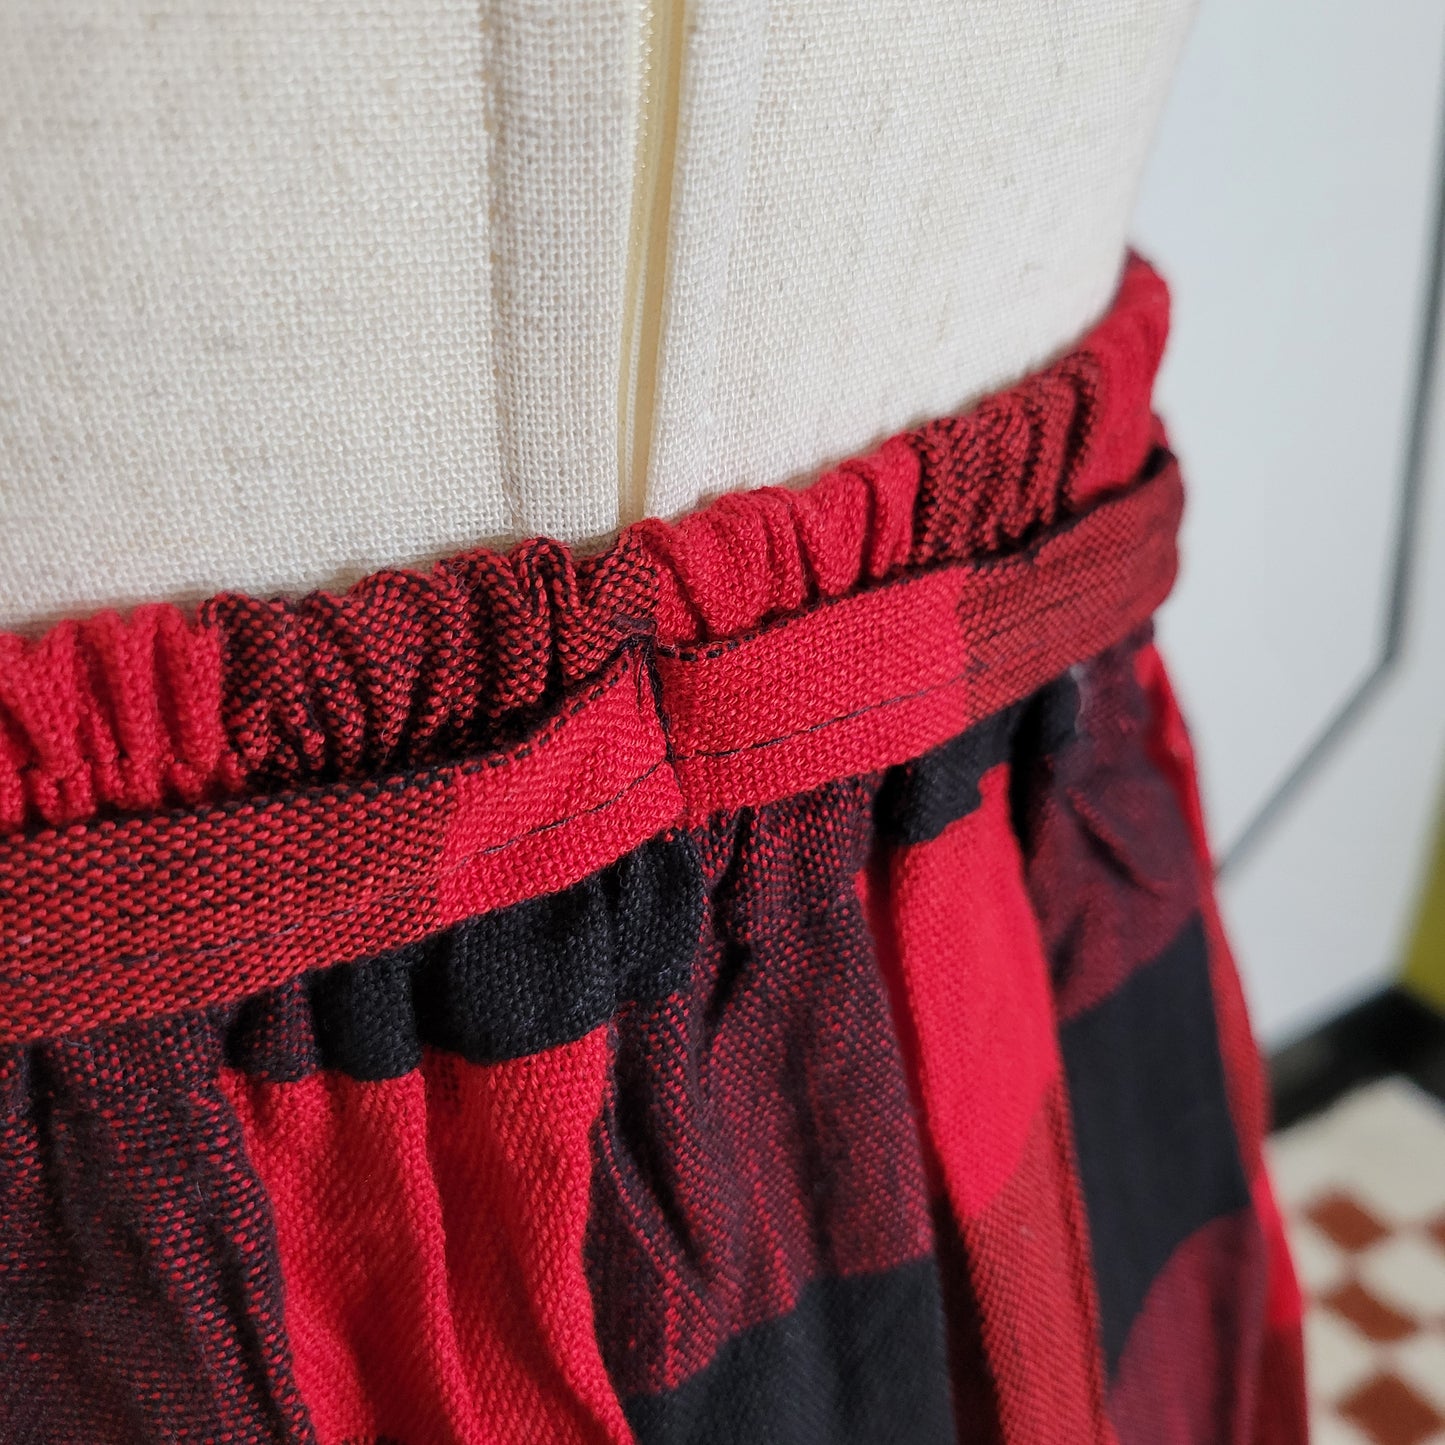 Vintage Plaid Hand Embroidered Southwest Design Skirt - small/medium